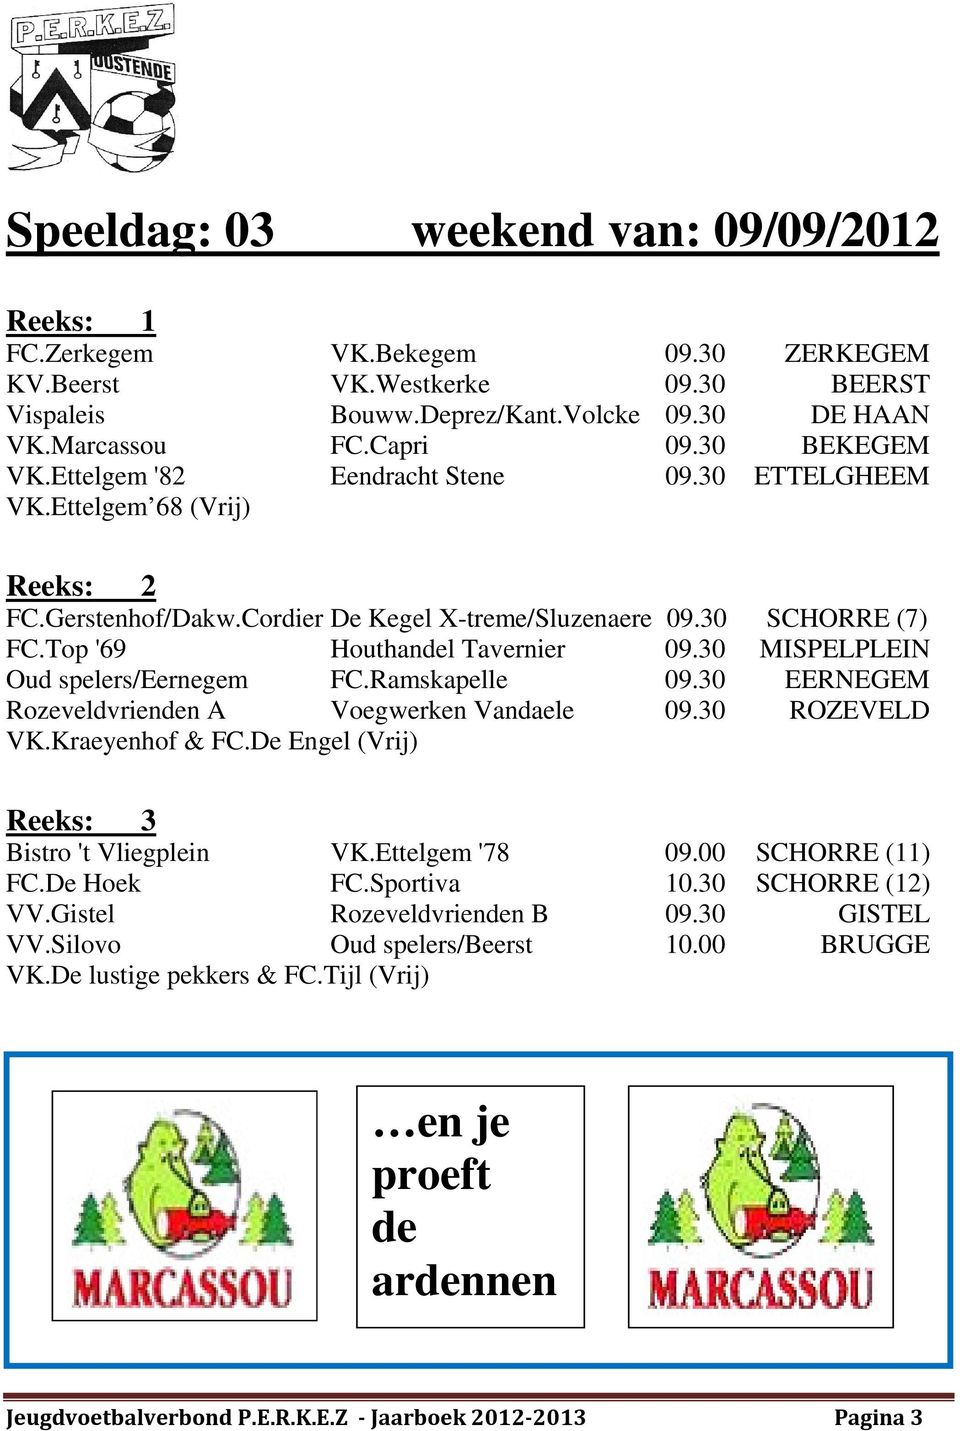 30 MISPELPLEIN Oud spelers/eernegem FC.Ramskapelle 09.30 EERNEGEM Rozeveldvrienden A Voegwerken Vandaele 09.30 ROZEVELD VK.Kraeyenhof & FC.De Engel (Vrij) Bistro 't Vliegplein VK.Ettelgem '78 09.